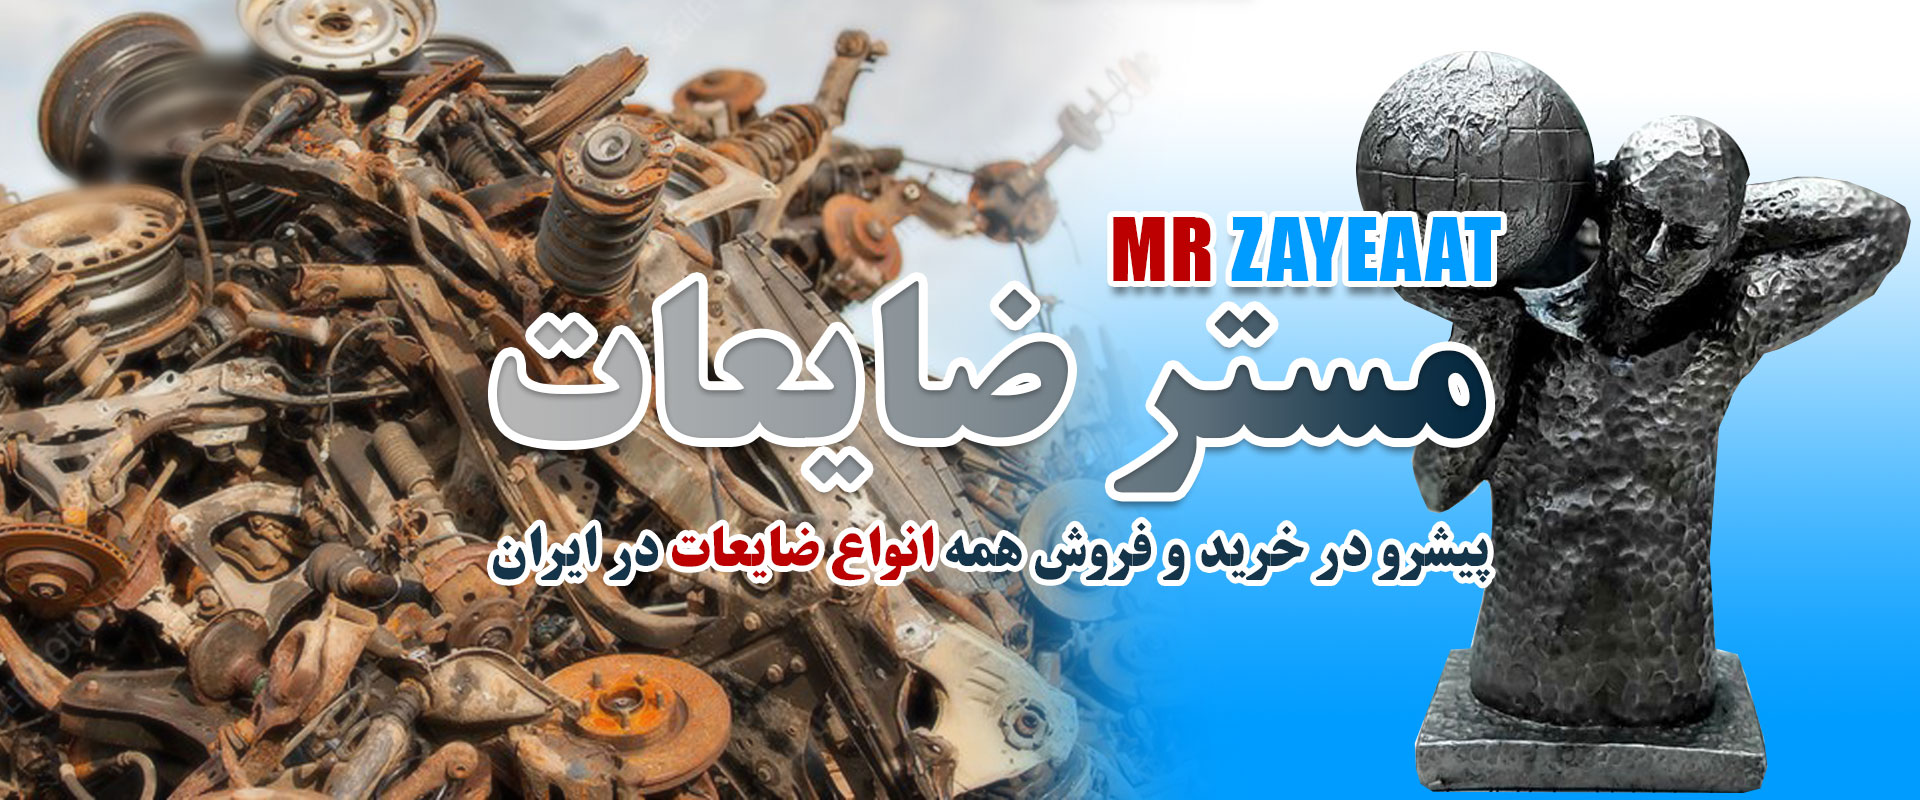 zayeaat.com